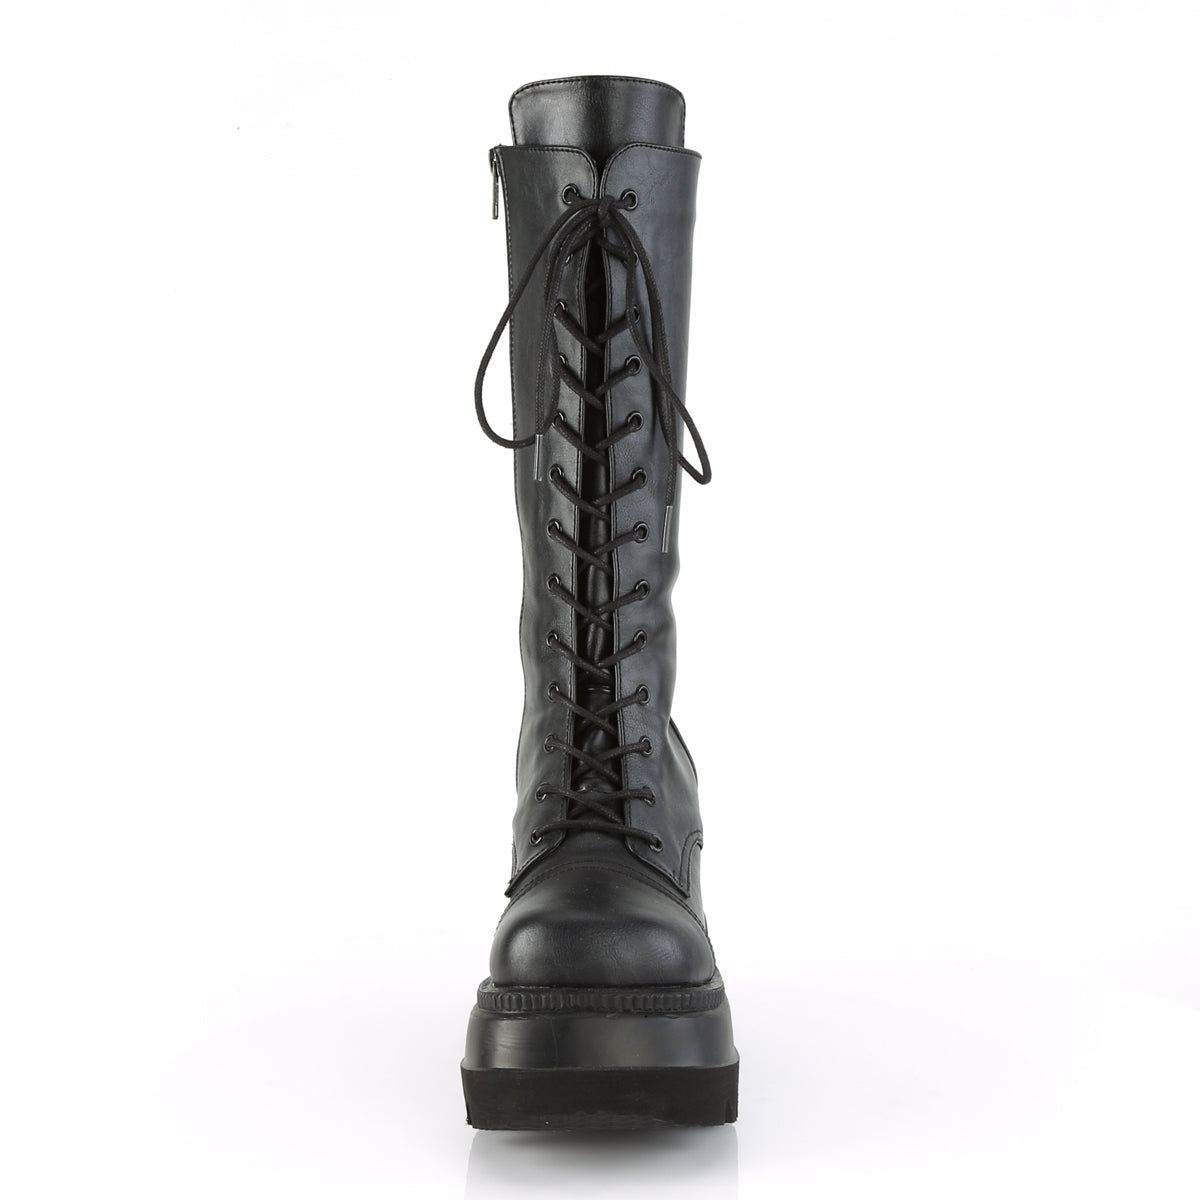 SHAKER-72 Demonia Black Vegan Leather Women's Mid-Calf & Knee High Boots [Demonia Cult Alternative Footwear]